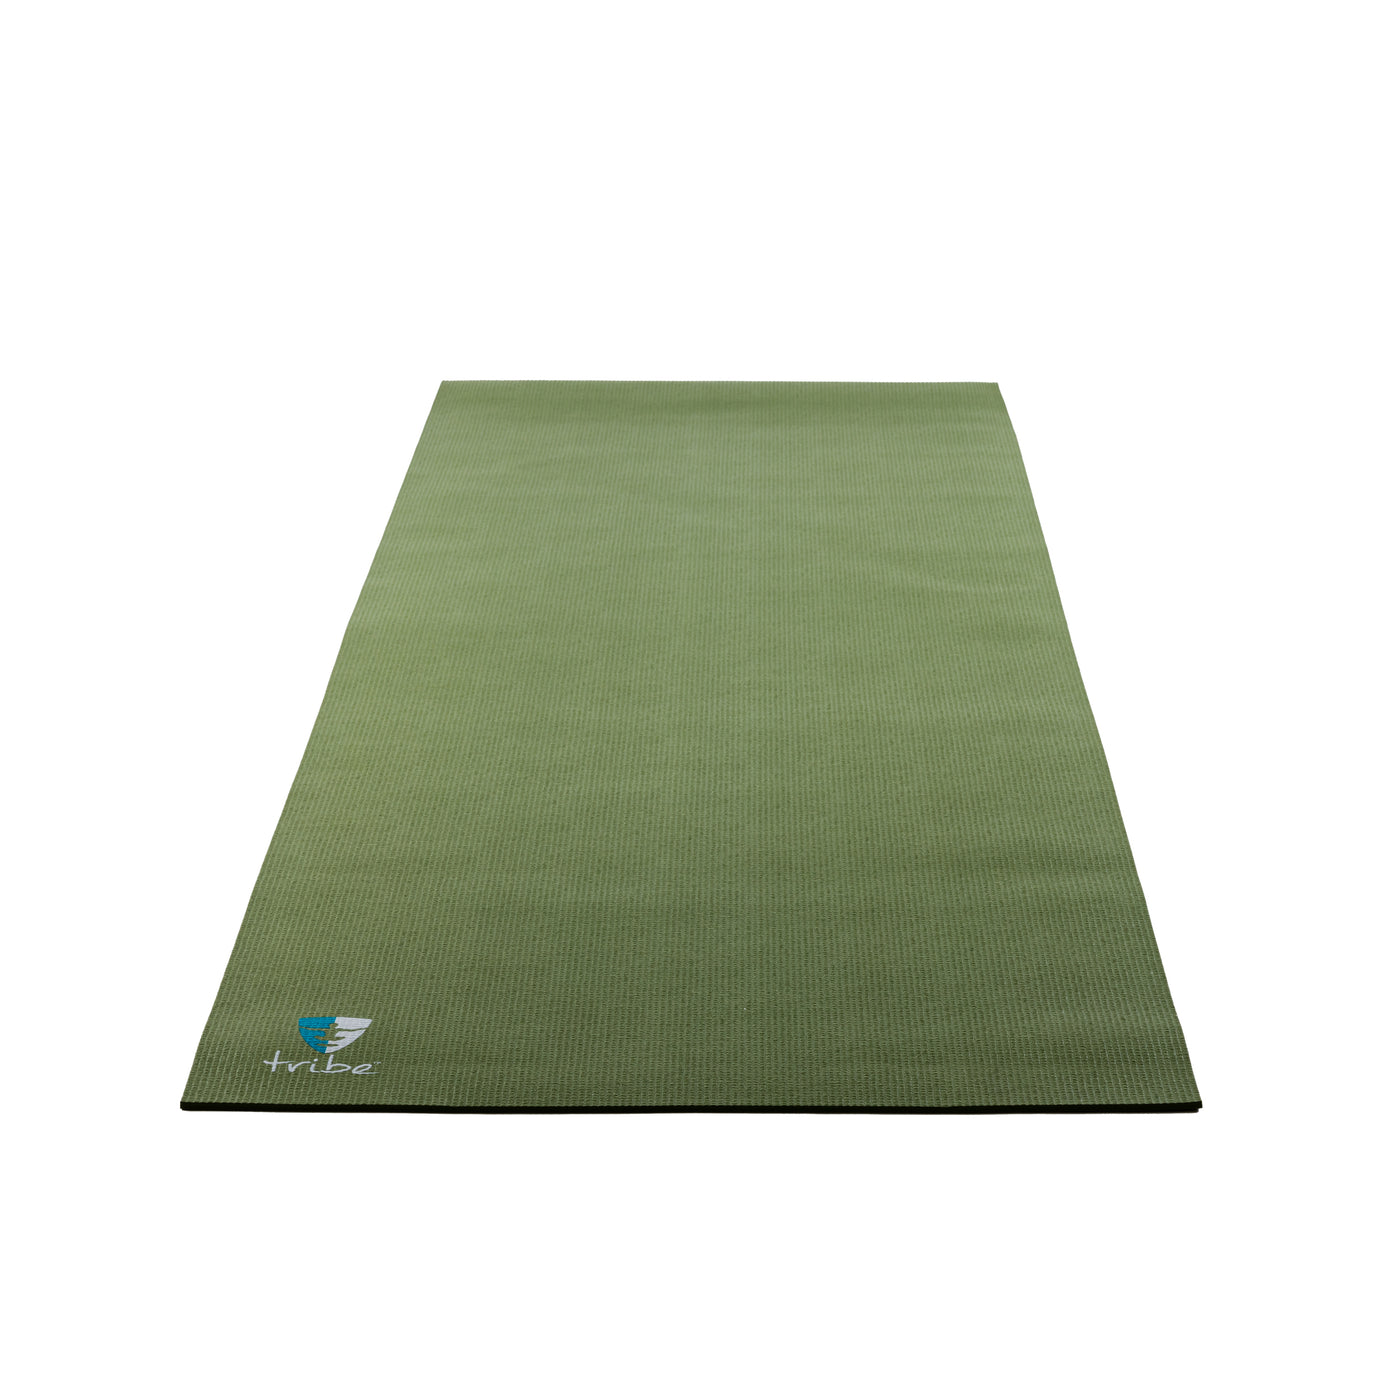 TRIBE ReGen 5mm Yoga Mat - Sage - unfurled | Eco Yoga Store